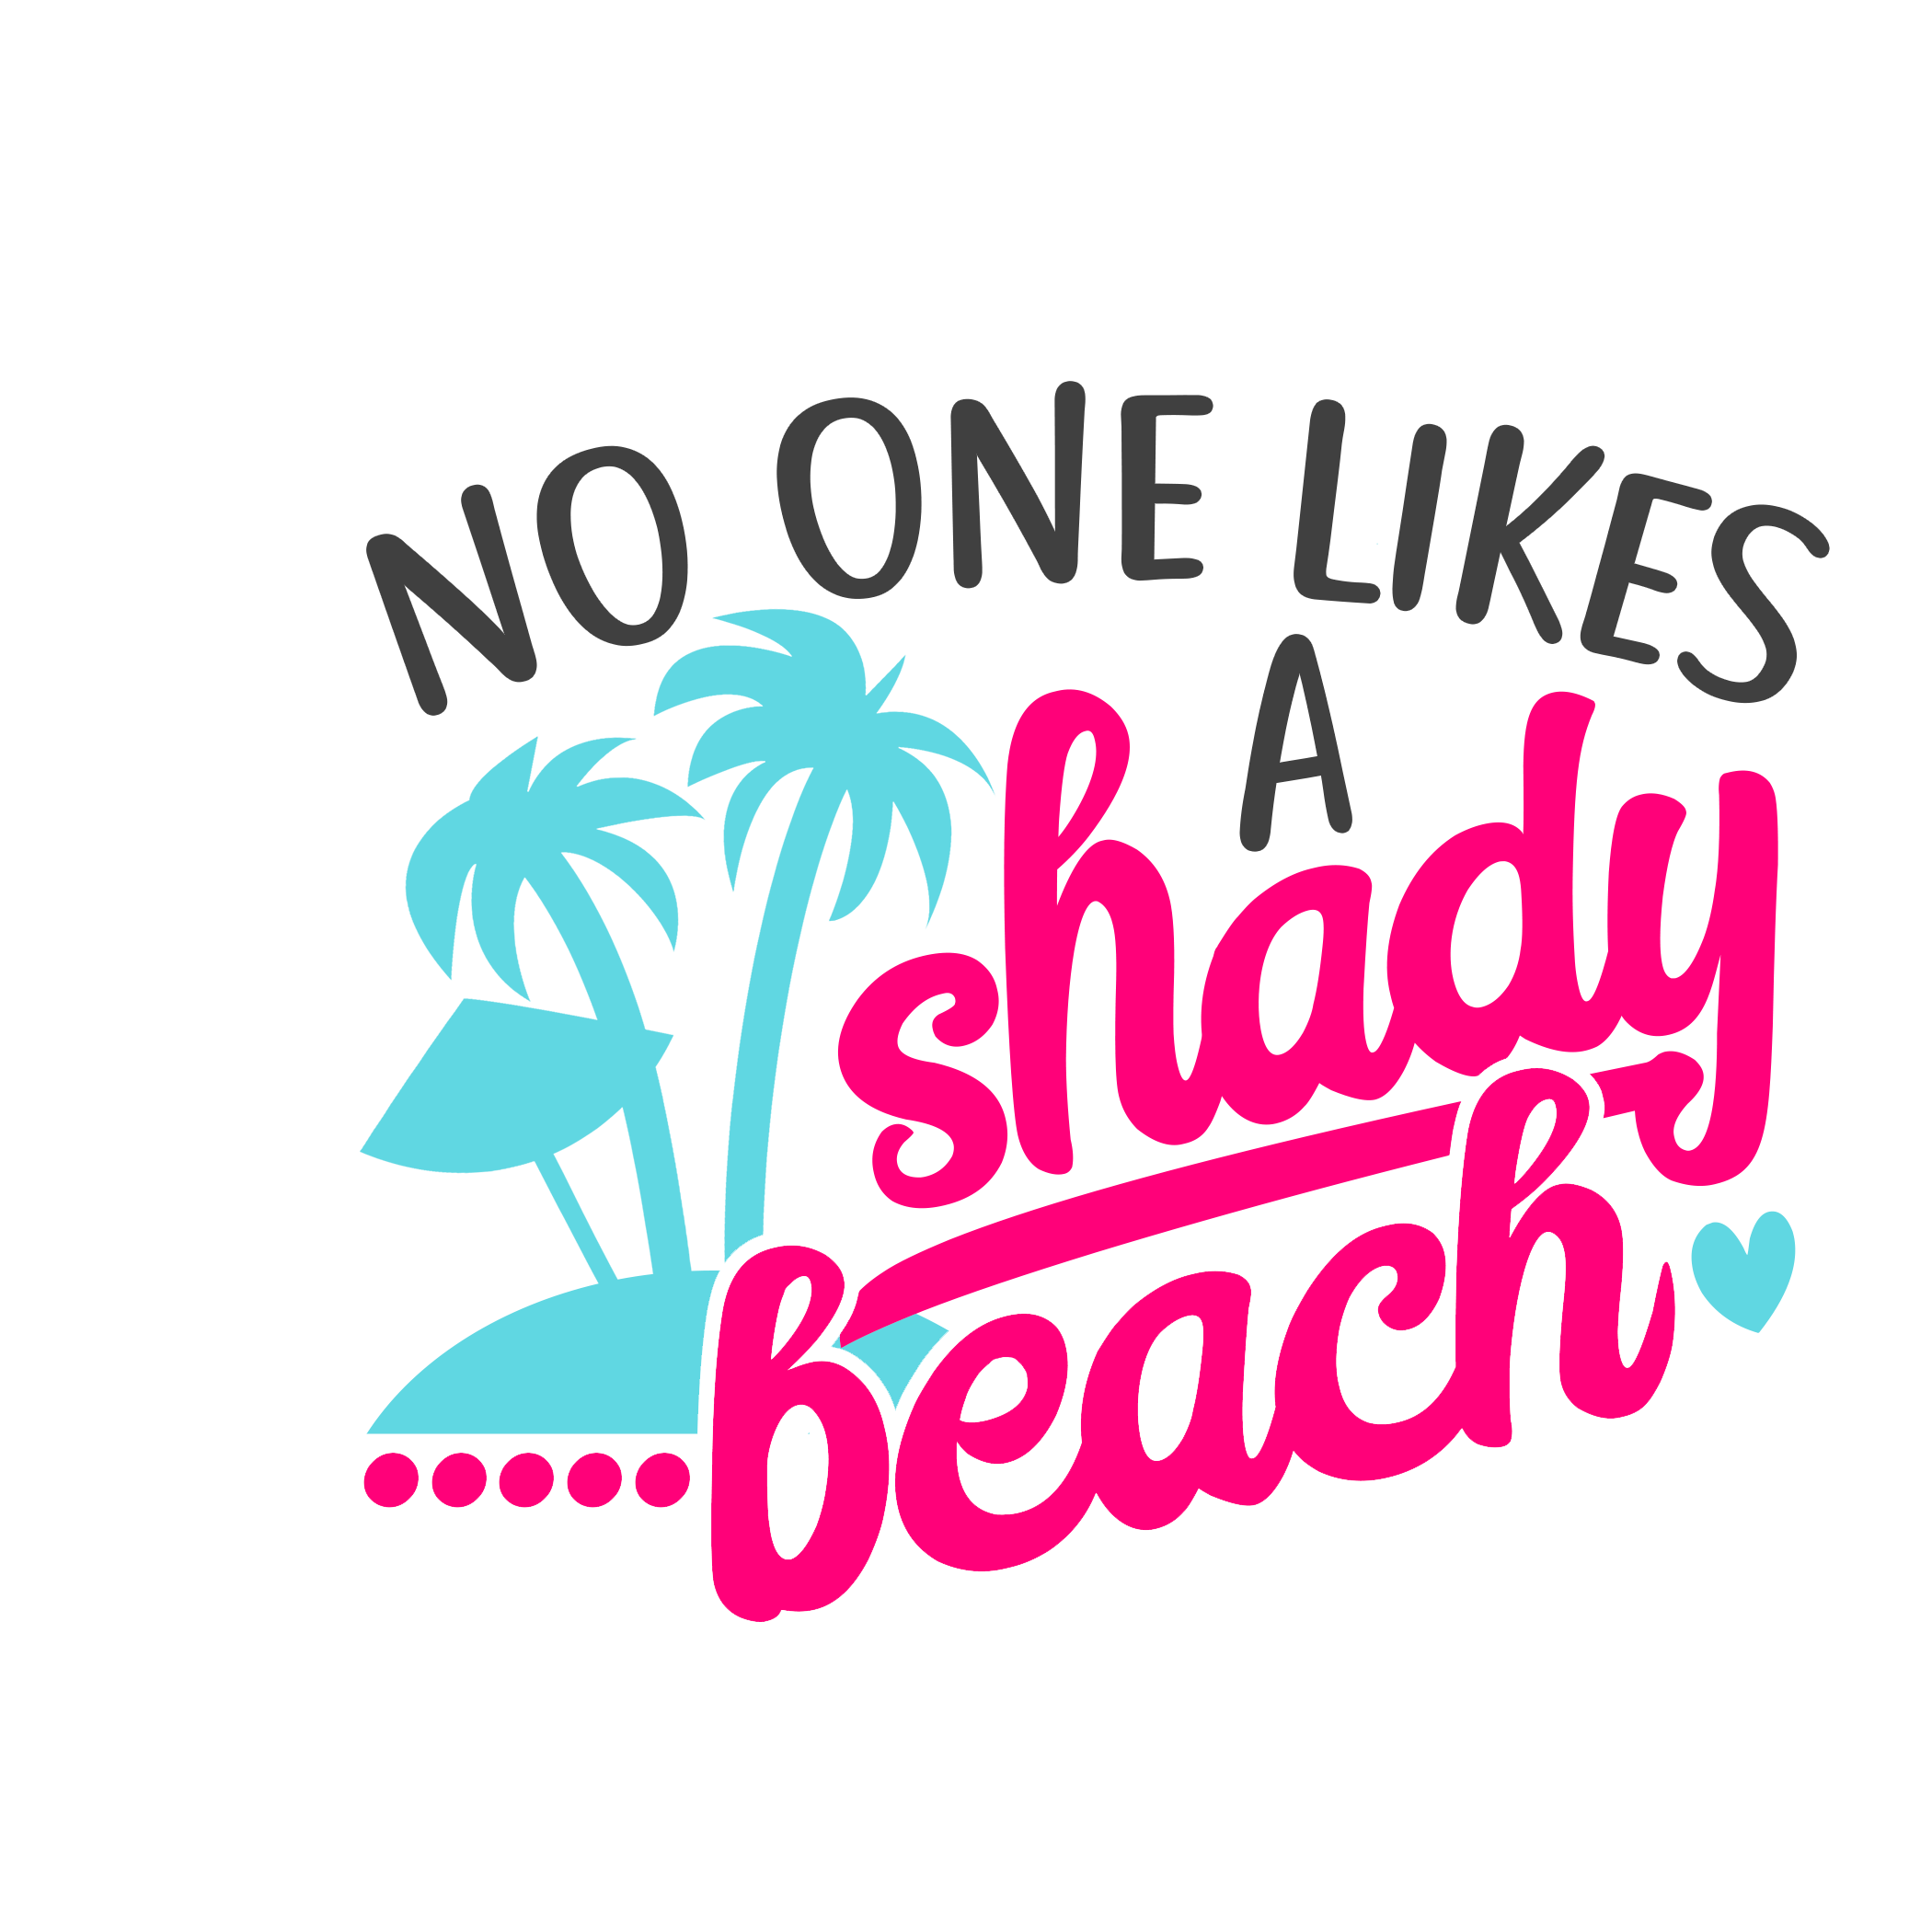 No One Likes a Shady Beach - Printed Tee